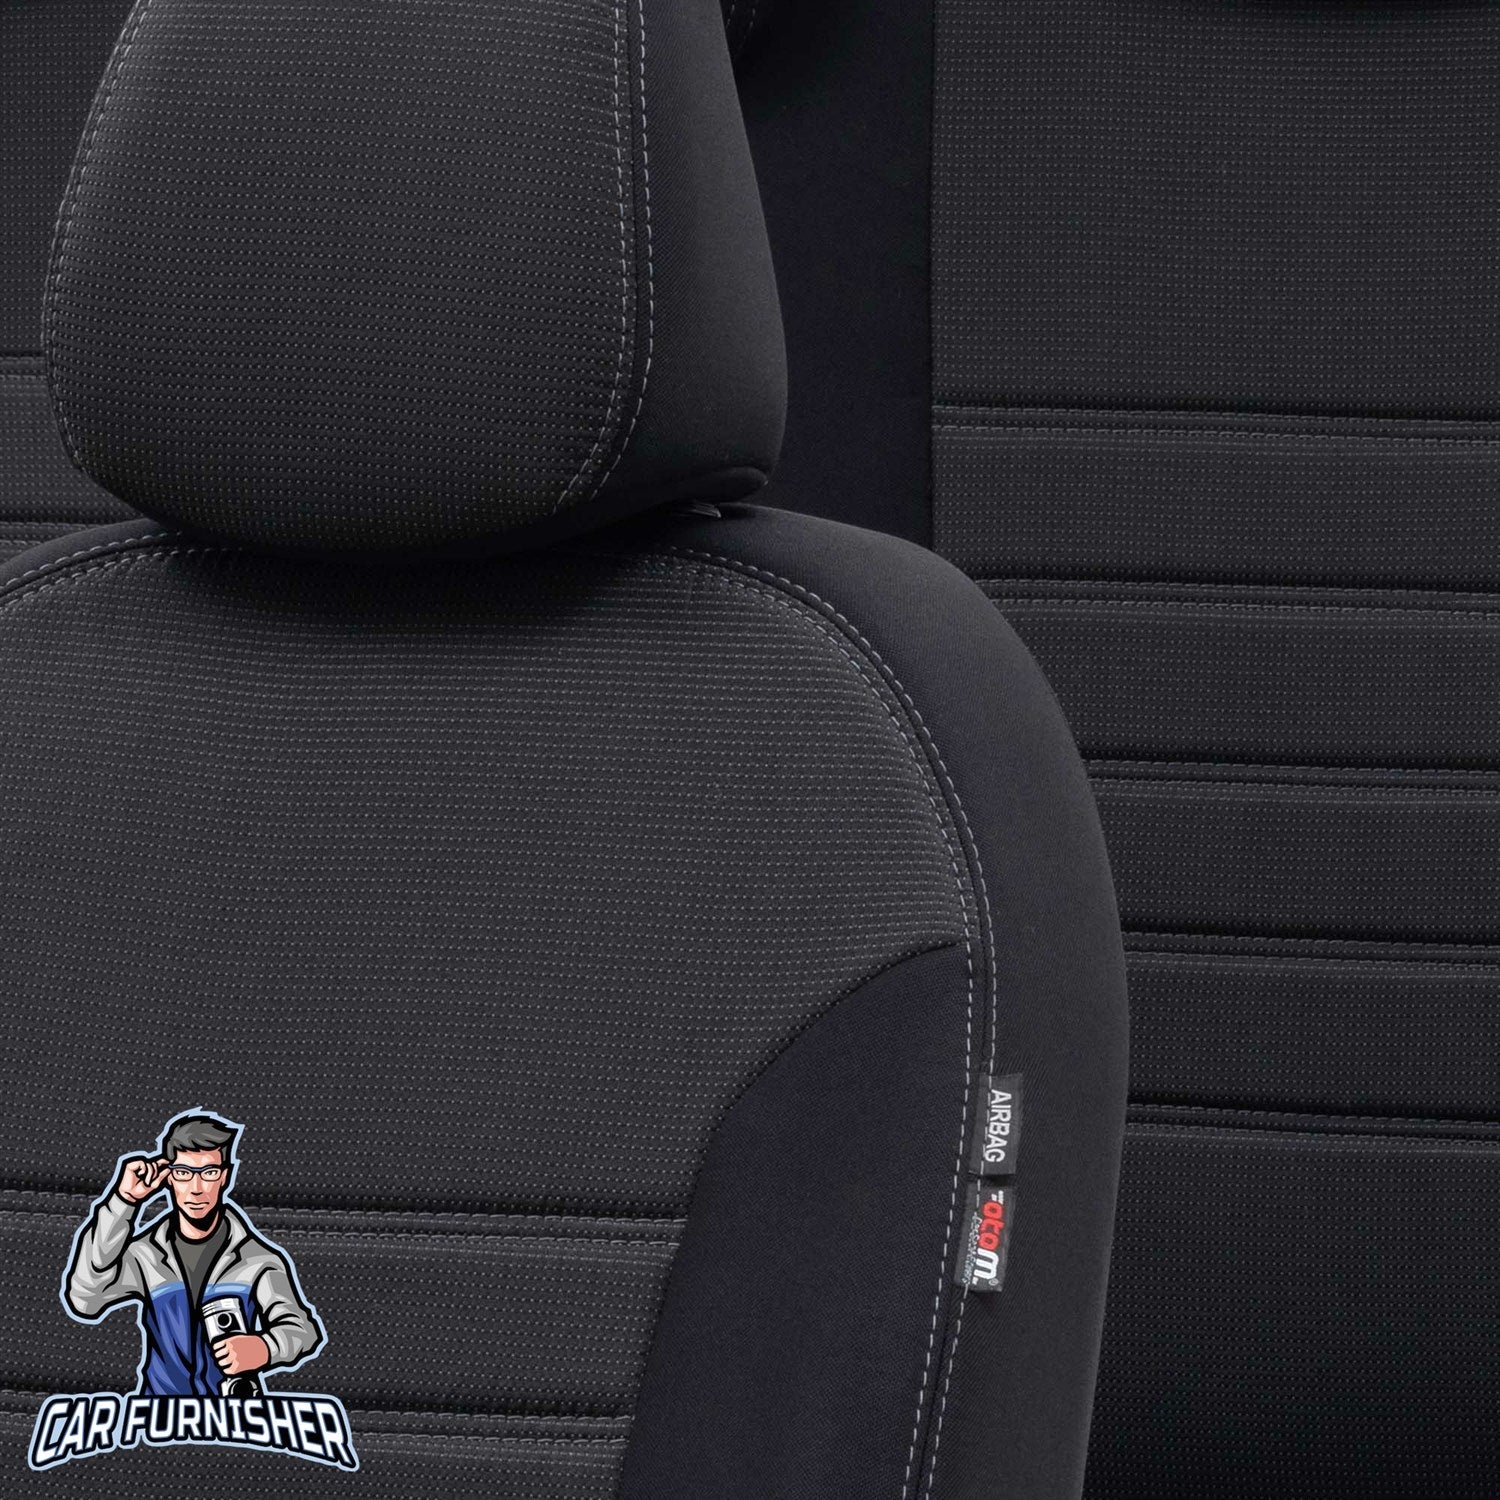 Seat Toledo Seat Covers Original Jacquard Design Dark Gray Jacquard Fabric